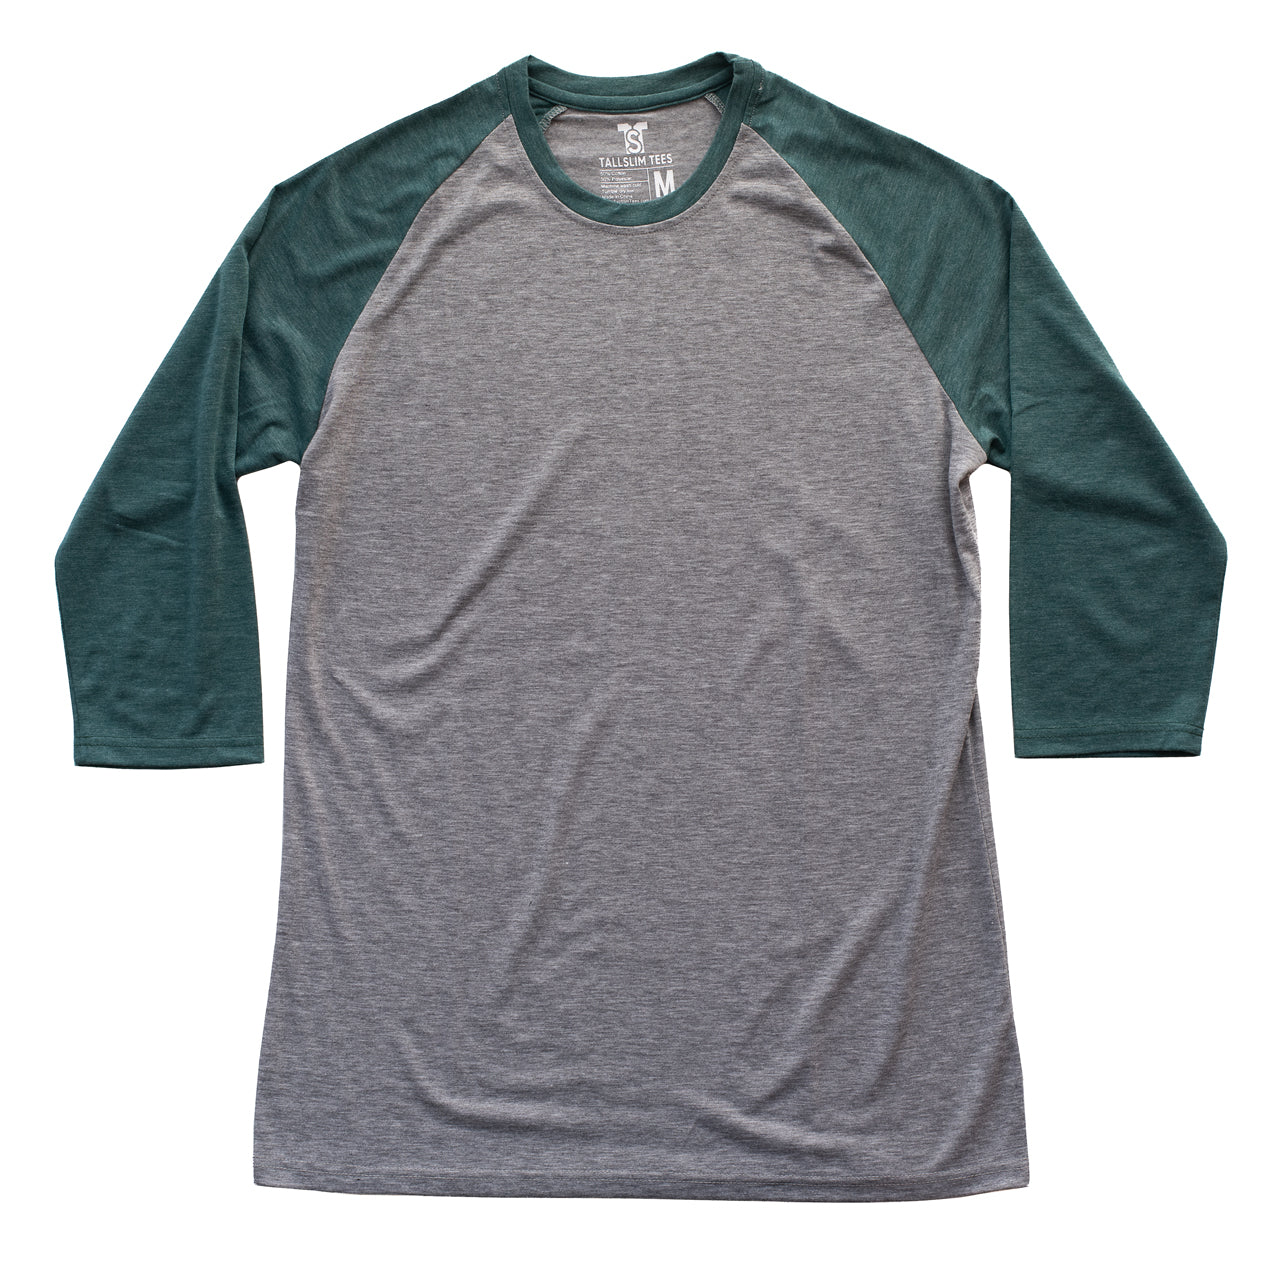 Gray and Green Raglan 3/4 Sleeve Shirt For Tall Slim Men